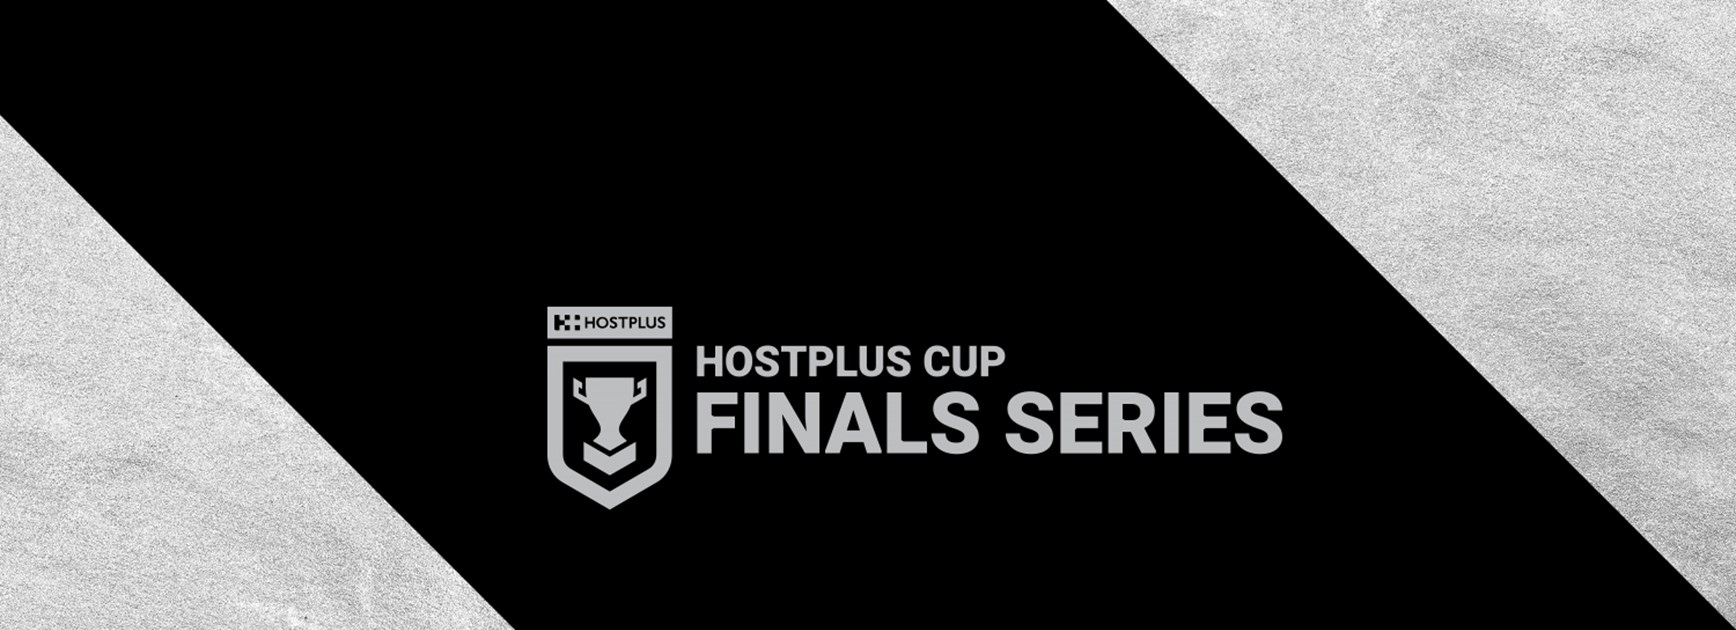 Hostplus Cup Finals Week 2 team lists